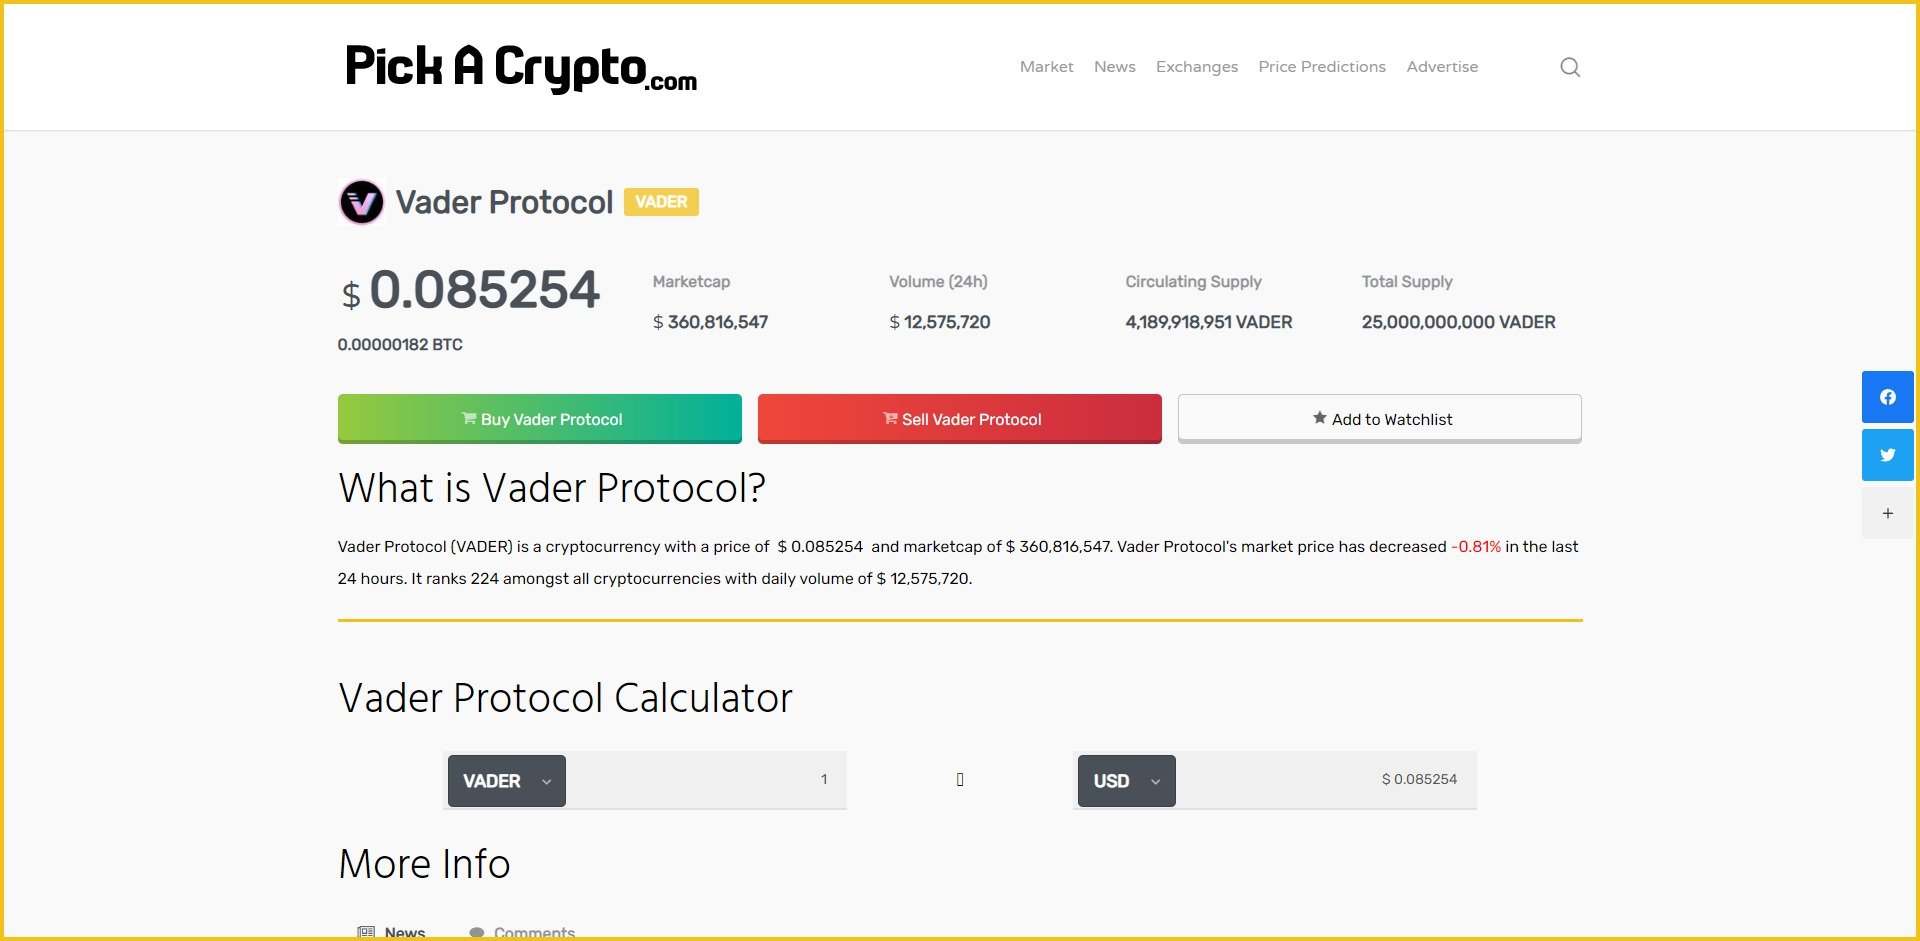 Vader Protocol Price Prediction Market